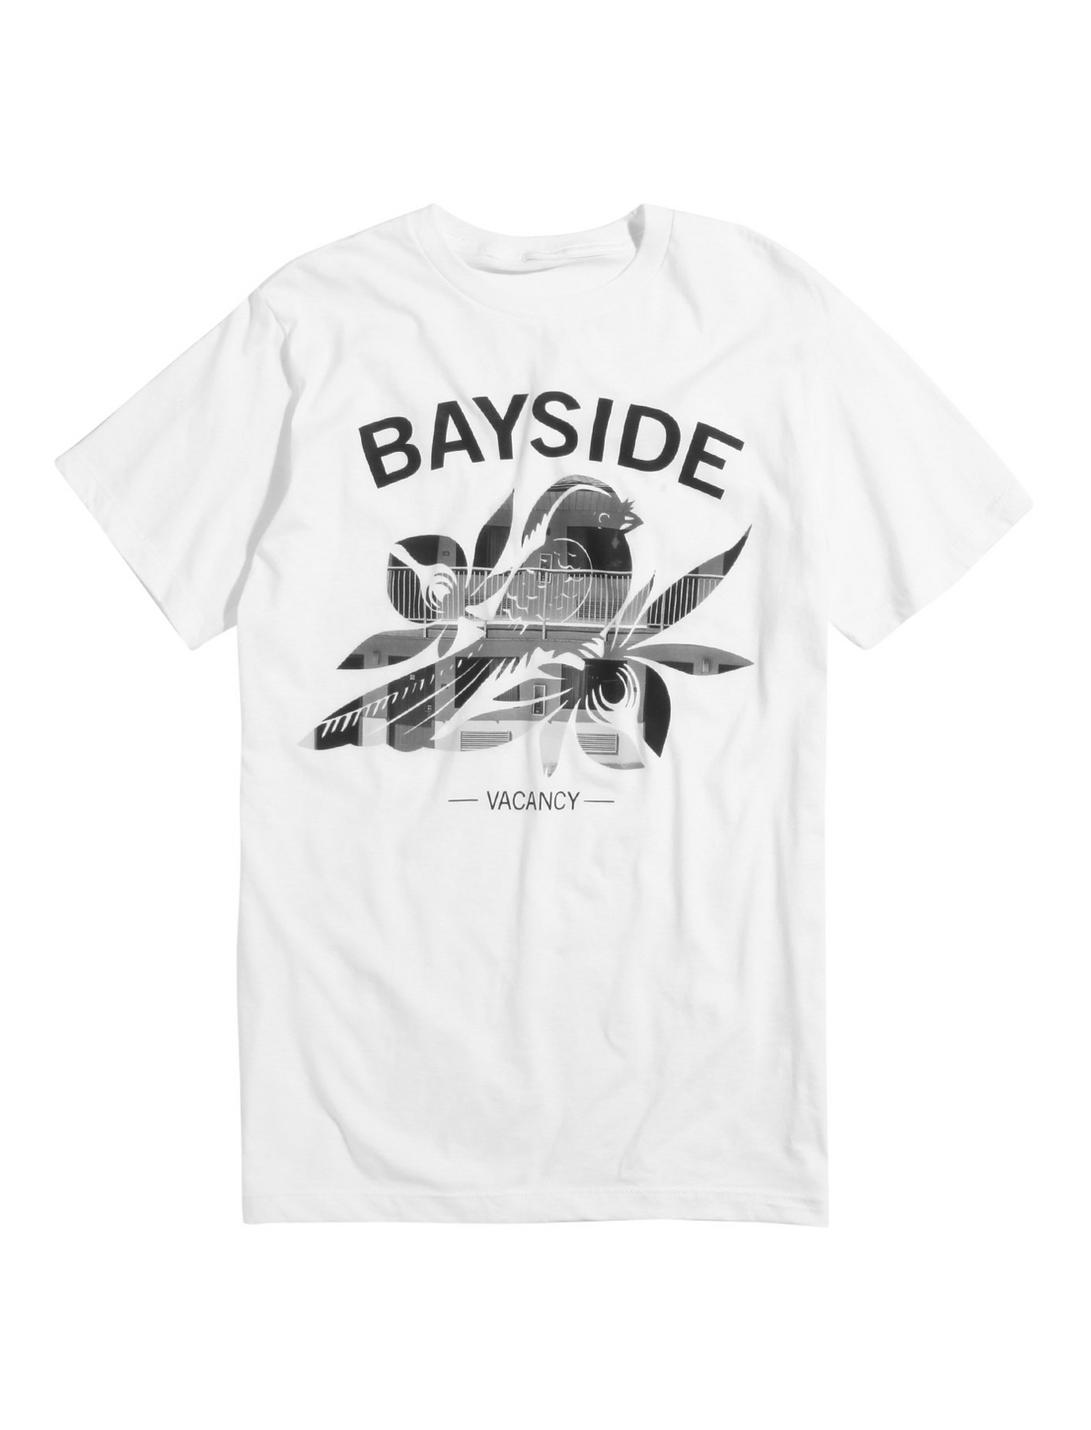 Bayside Vacancy T-Shirt | Hot Topic